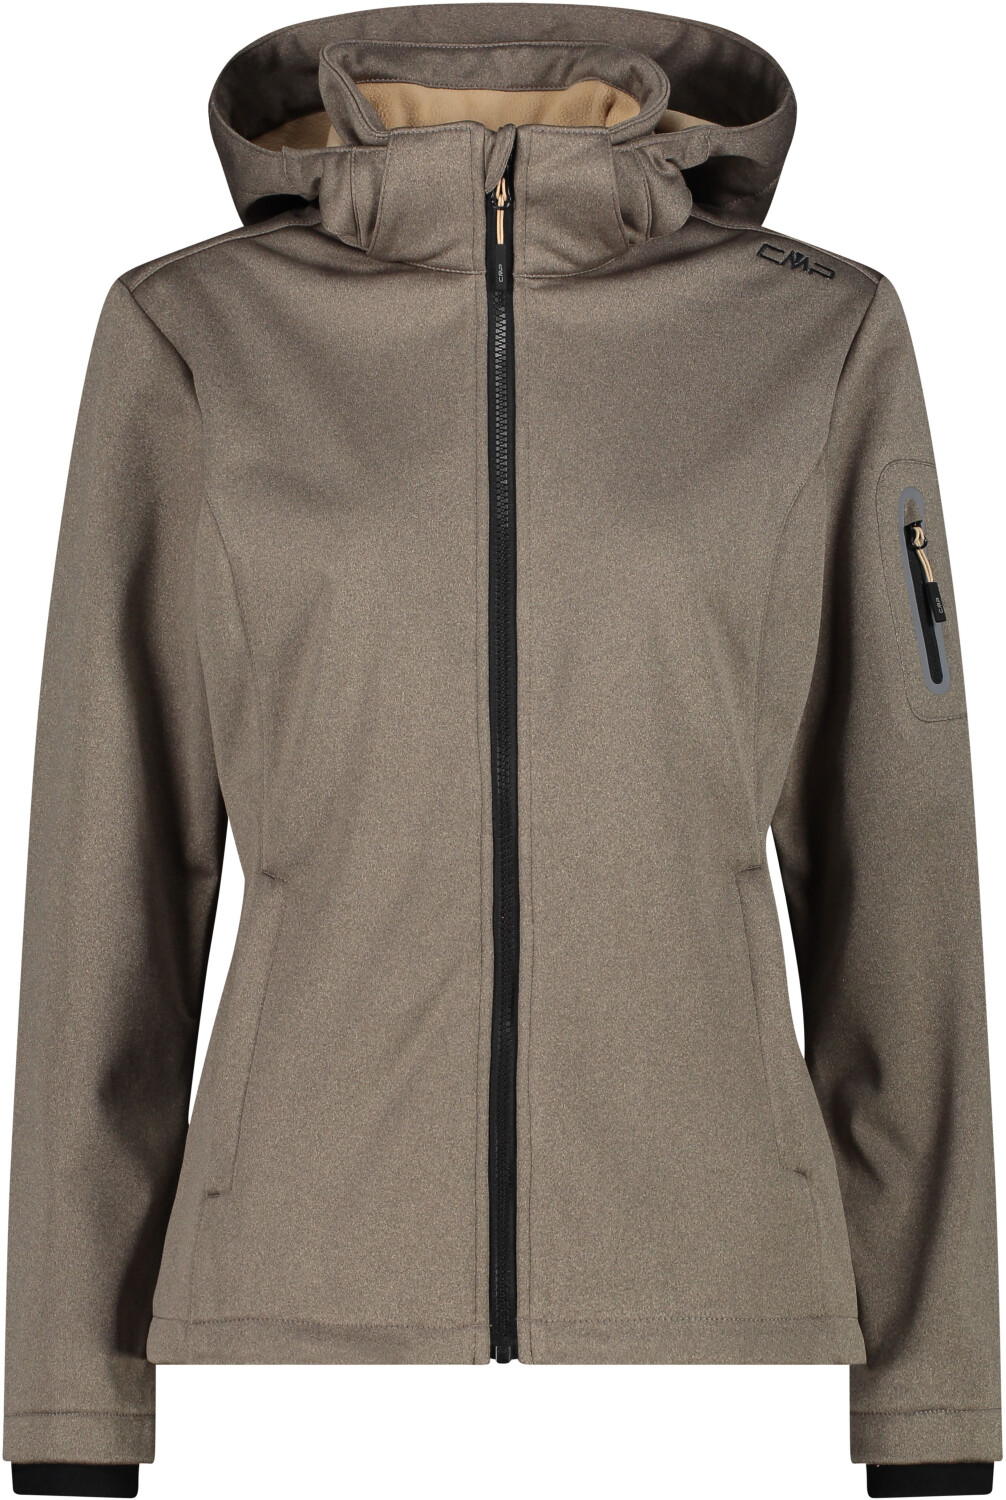 CMP Women\'s Mélange Softshell Jacket (39A5006M) sesamo mel./nero ab € 53,91  | Preisvergleich bei